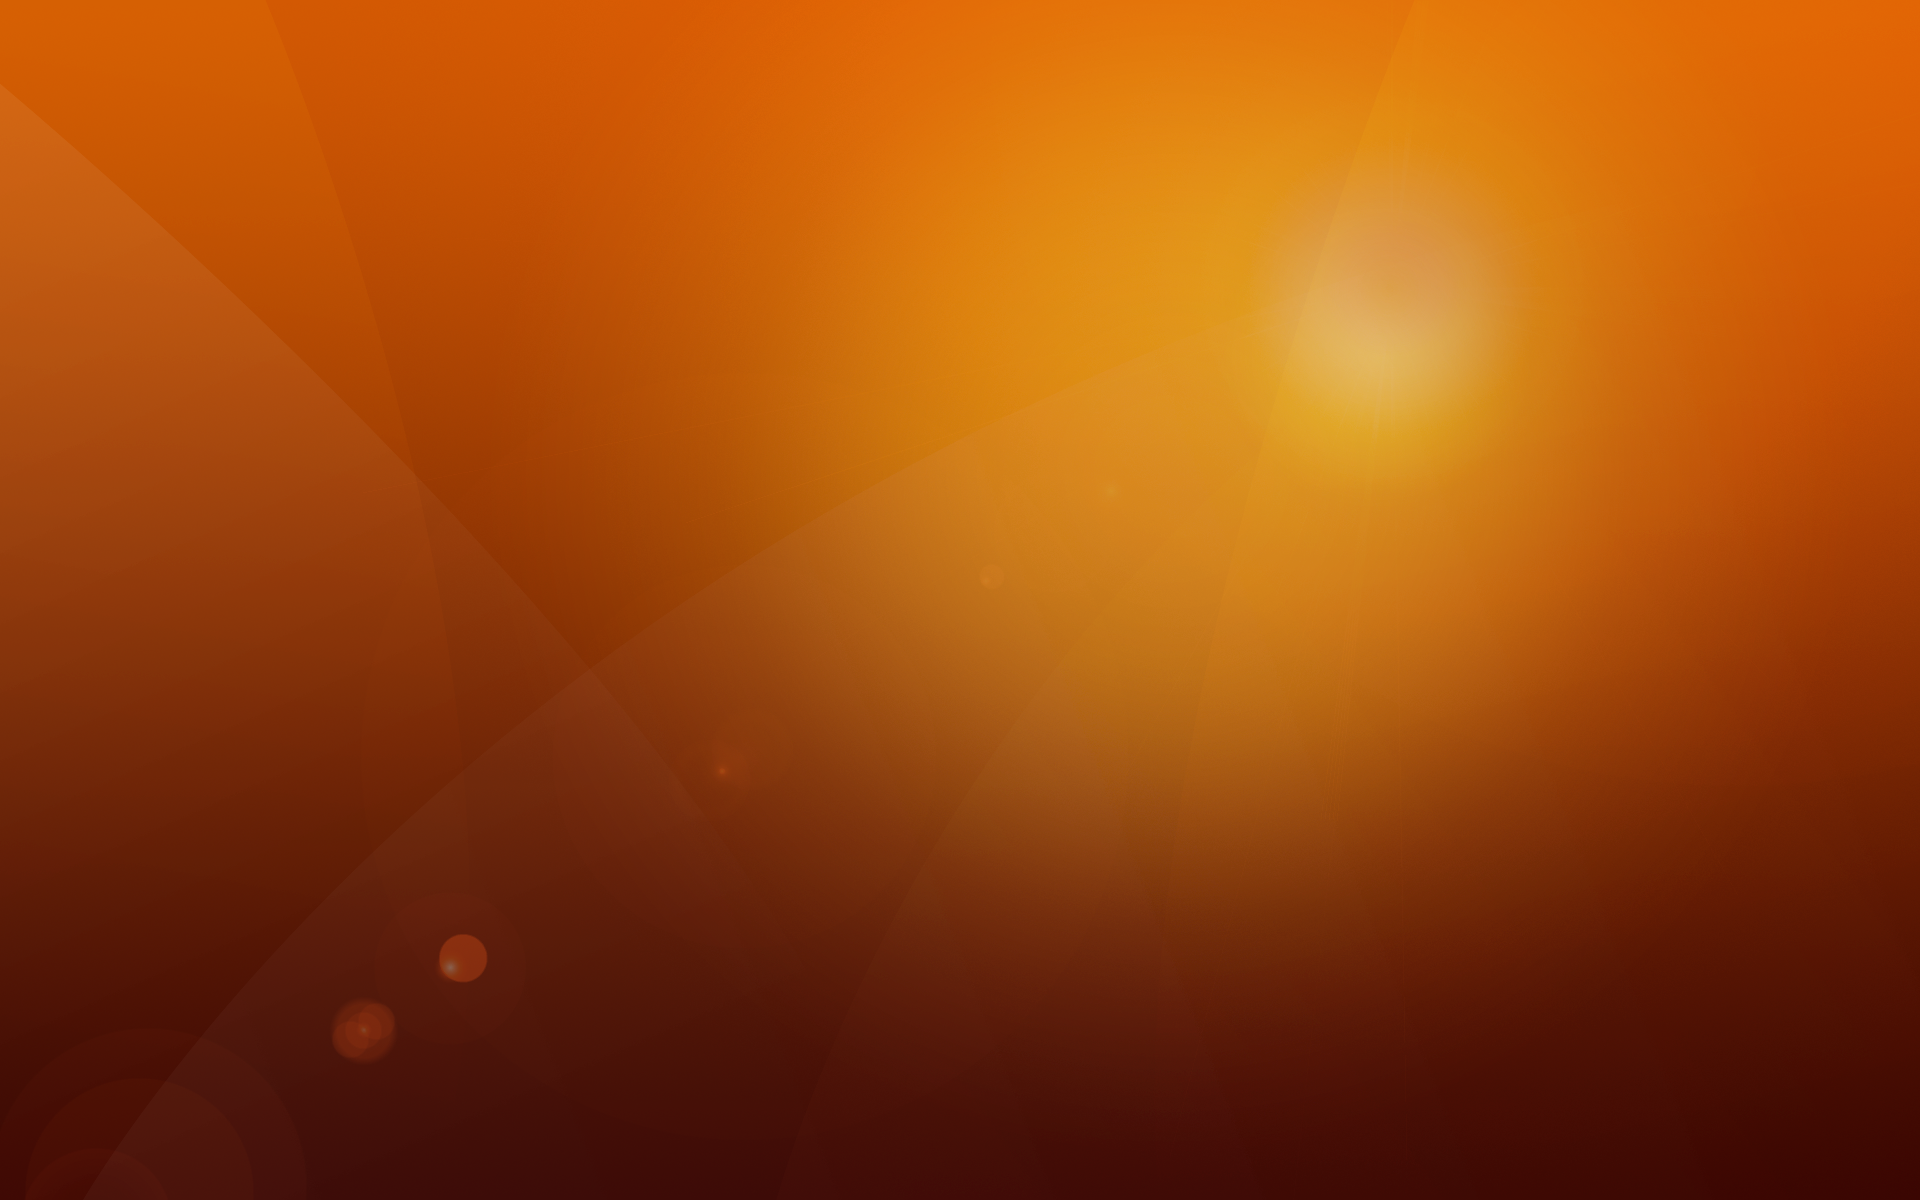 General 1920x1200 abstract lens flare orange background minimalism texture DeviantArt gradient digital art